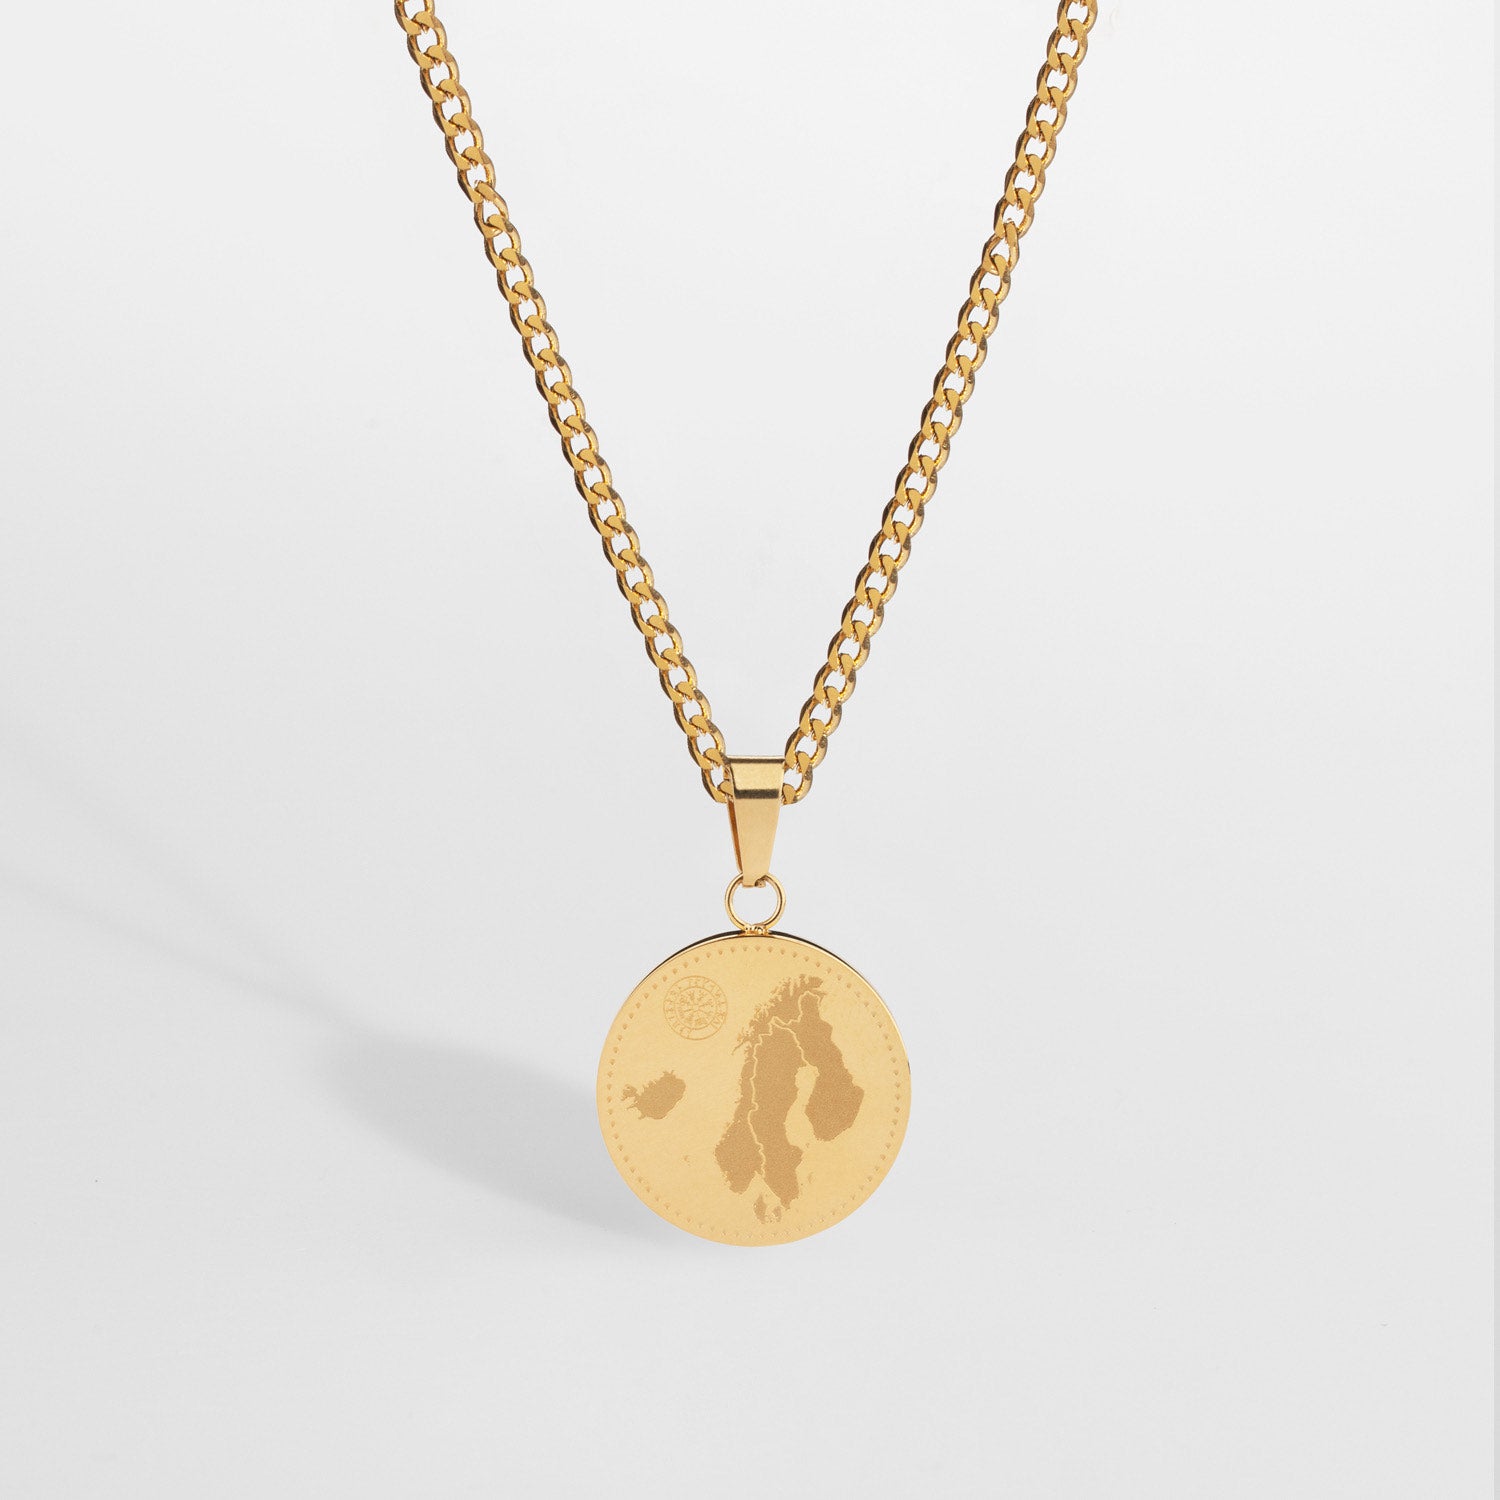 NL Heritage pendant - Gold-toned